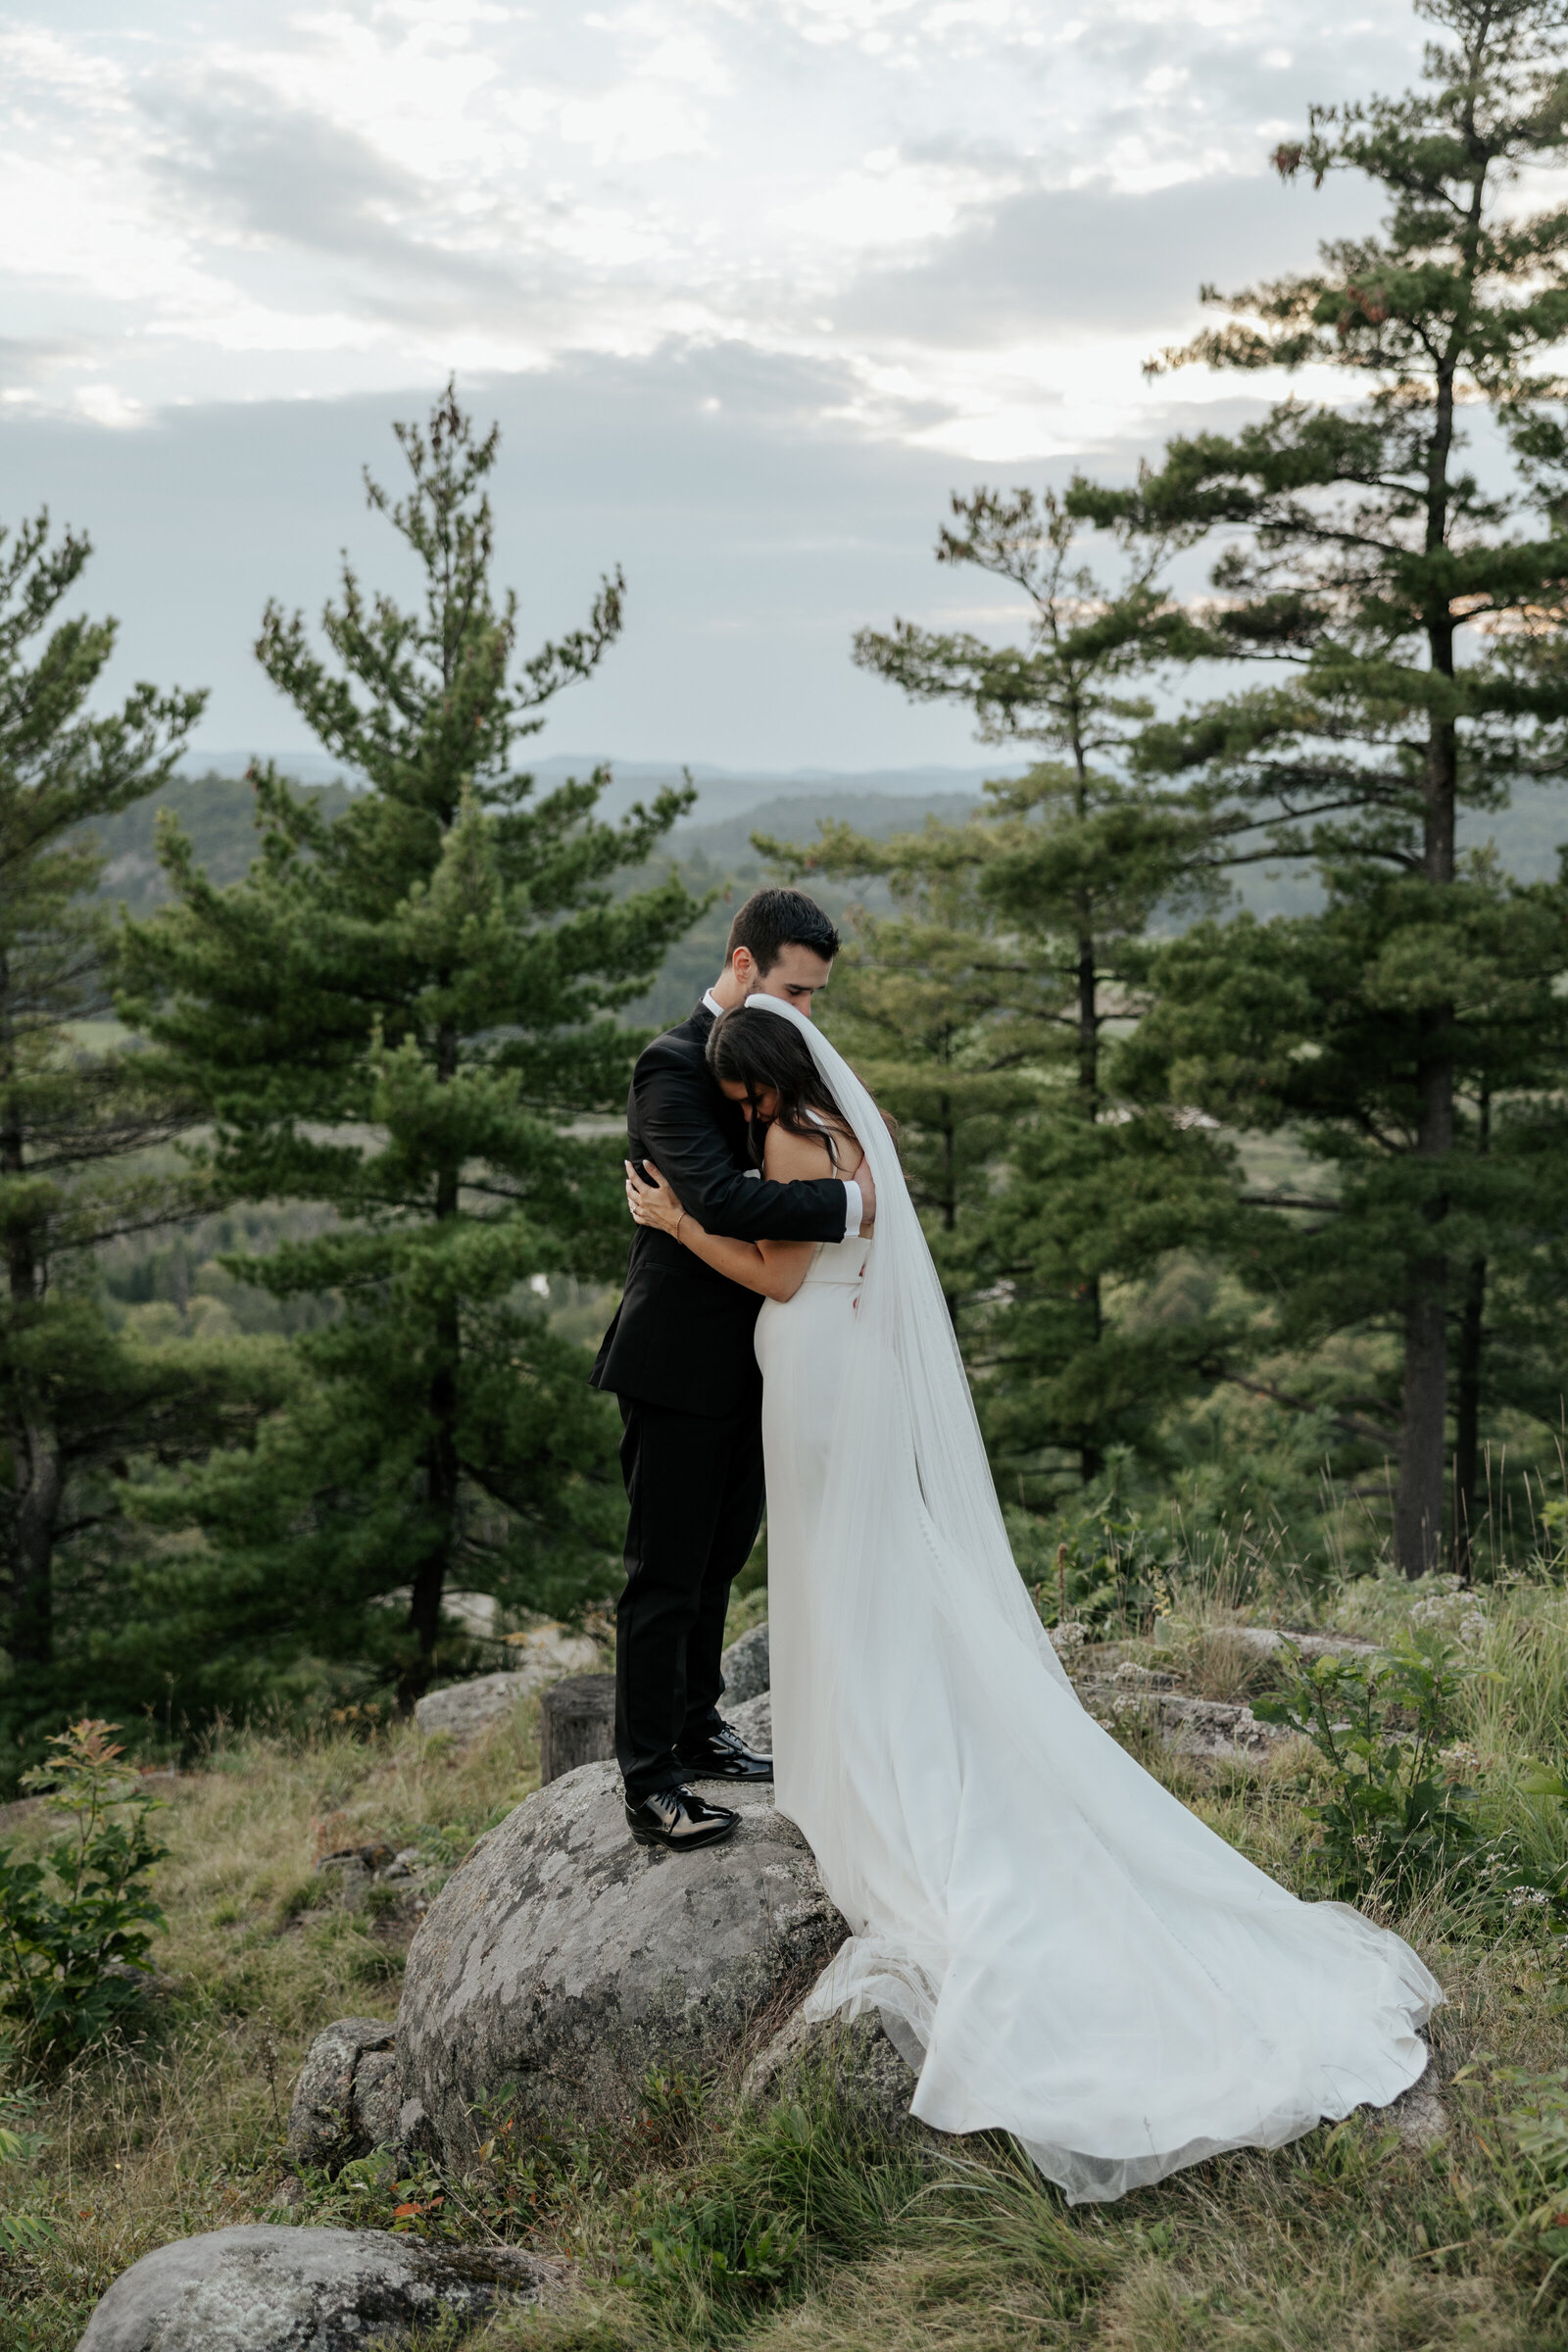 Veronique & Nicholas' Wedding - Lance Photography 123